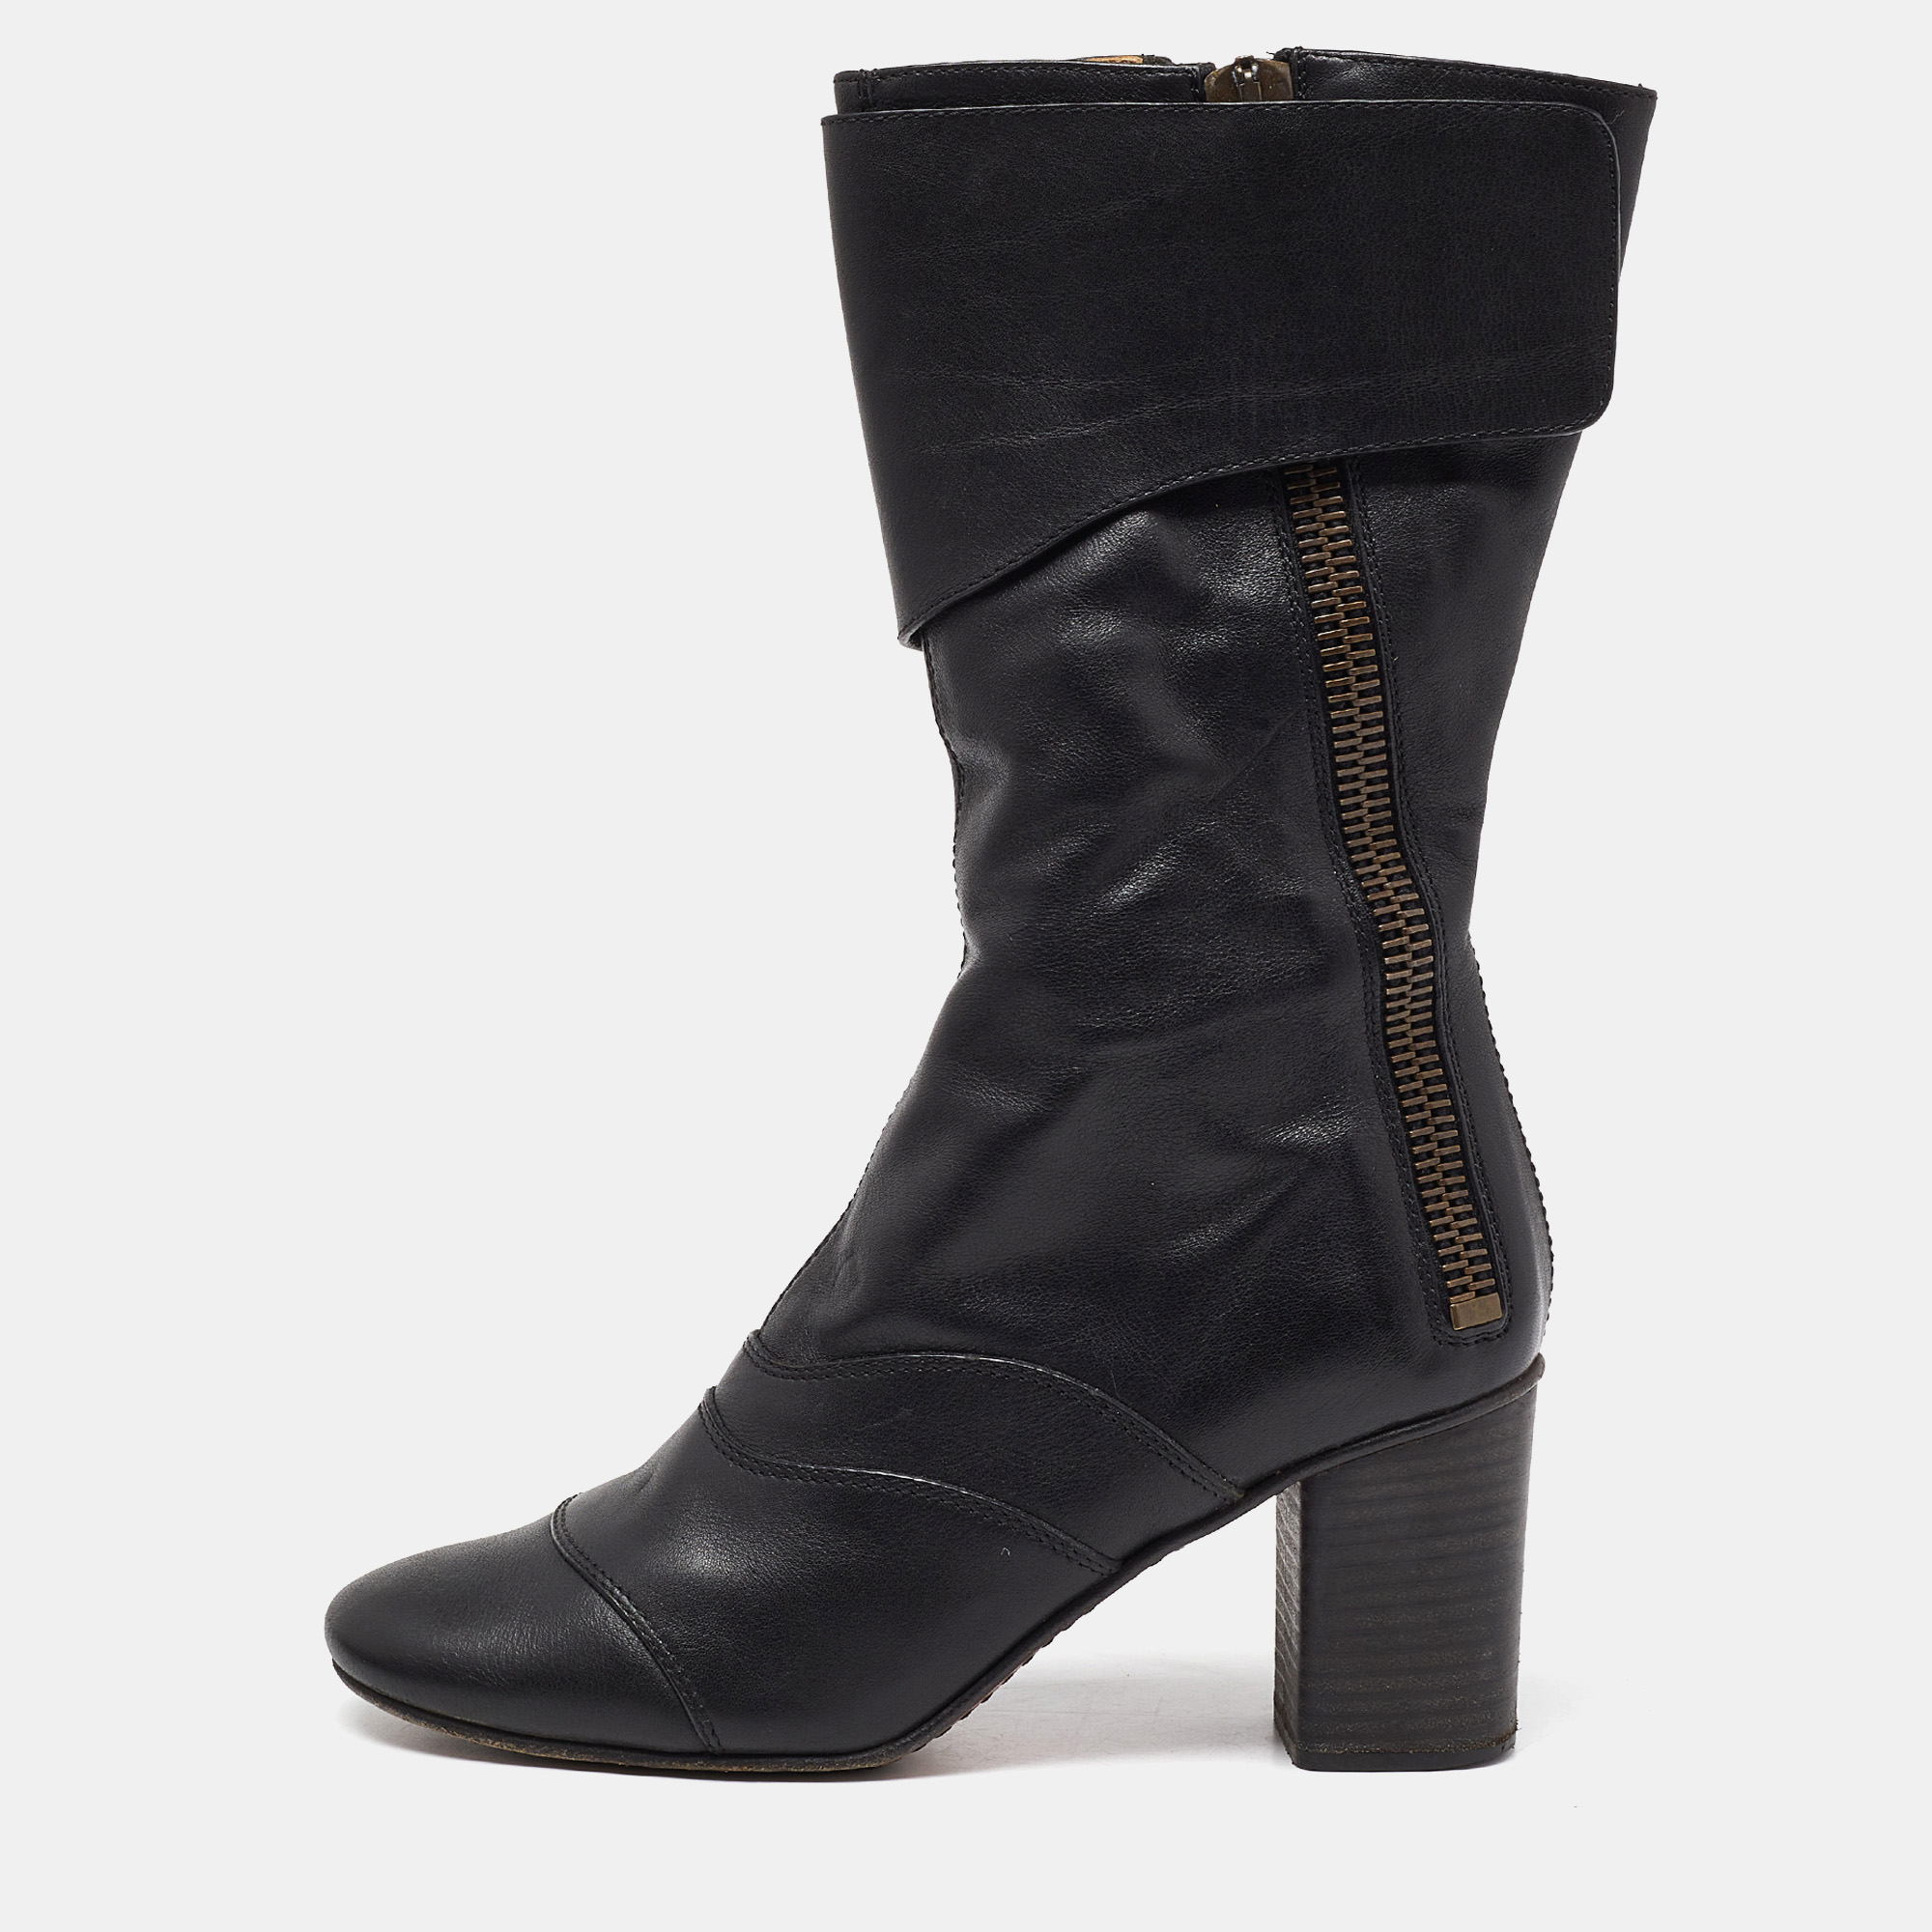 

Chloe Black Leather Block Heel Mid Calf Boots Size